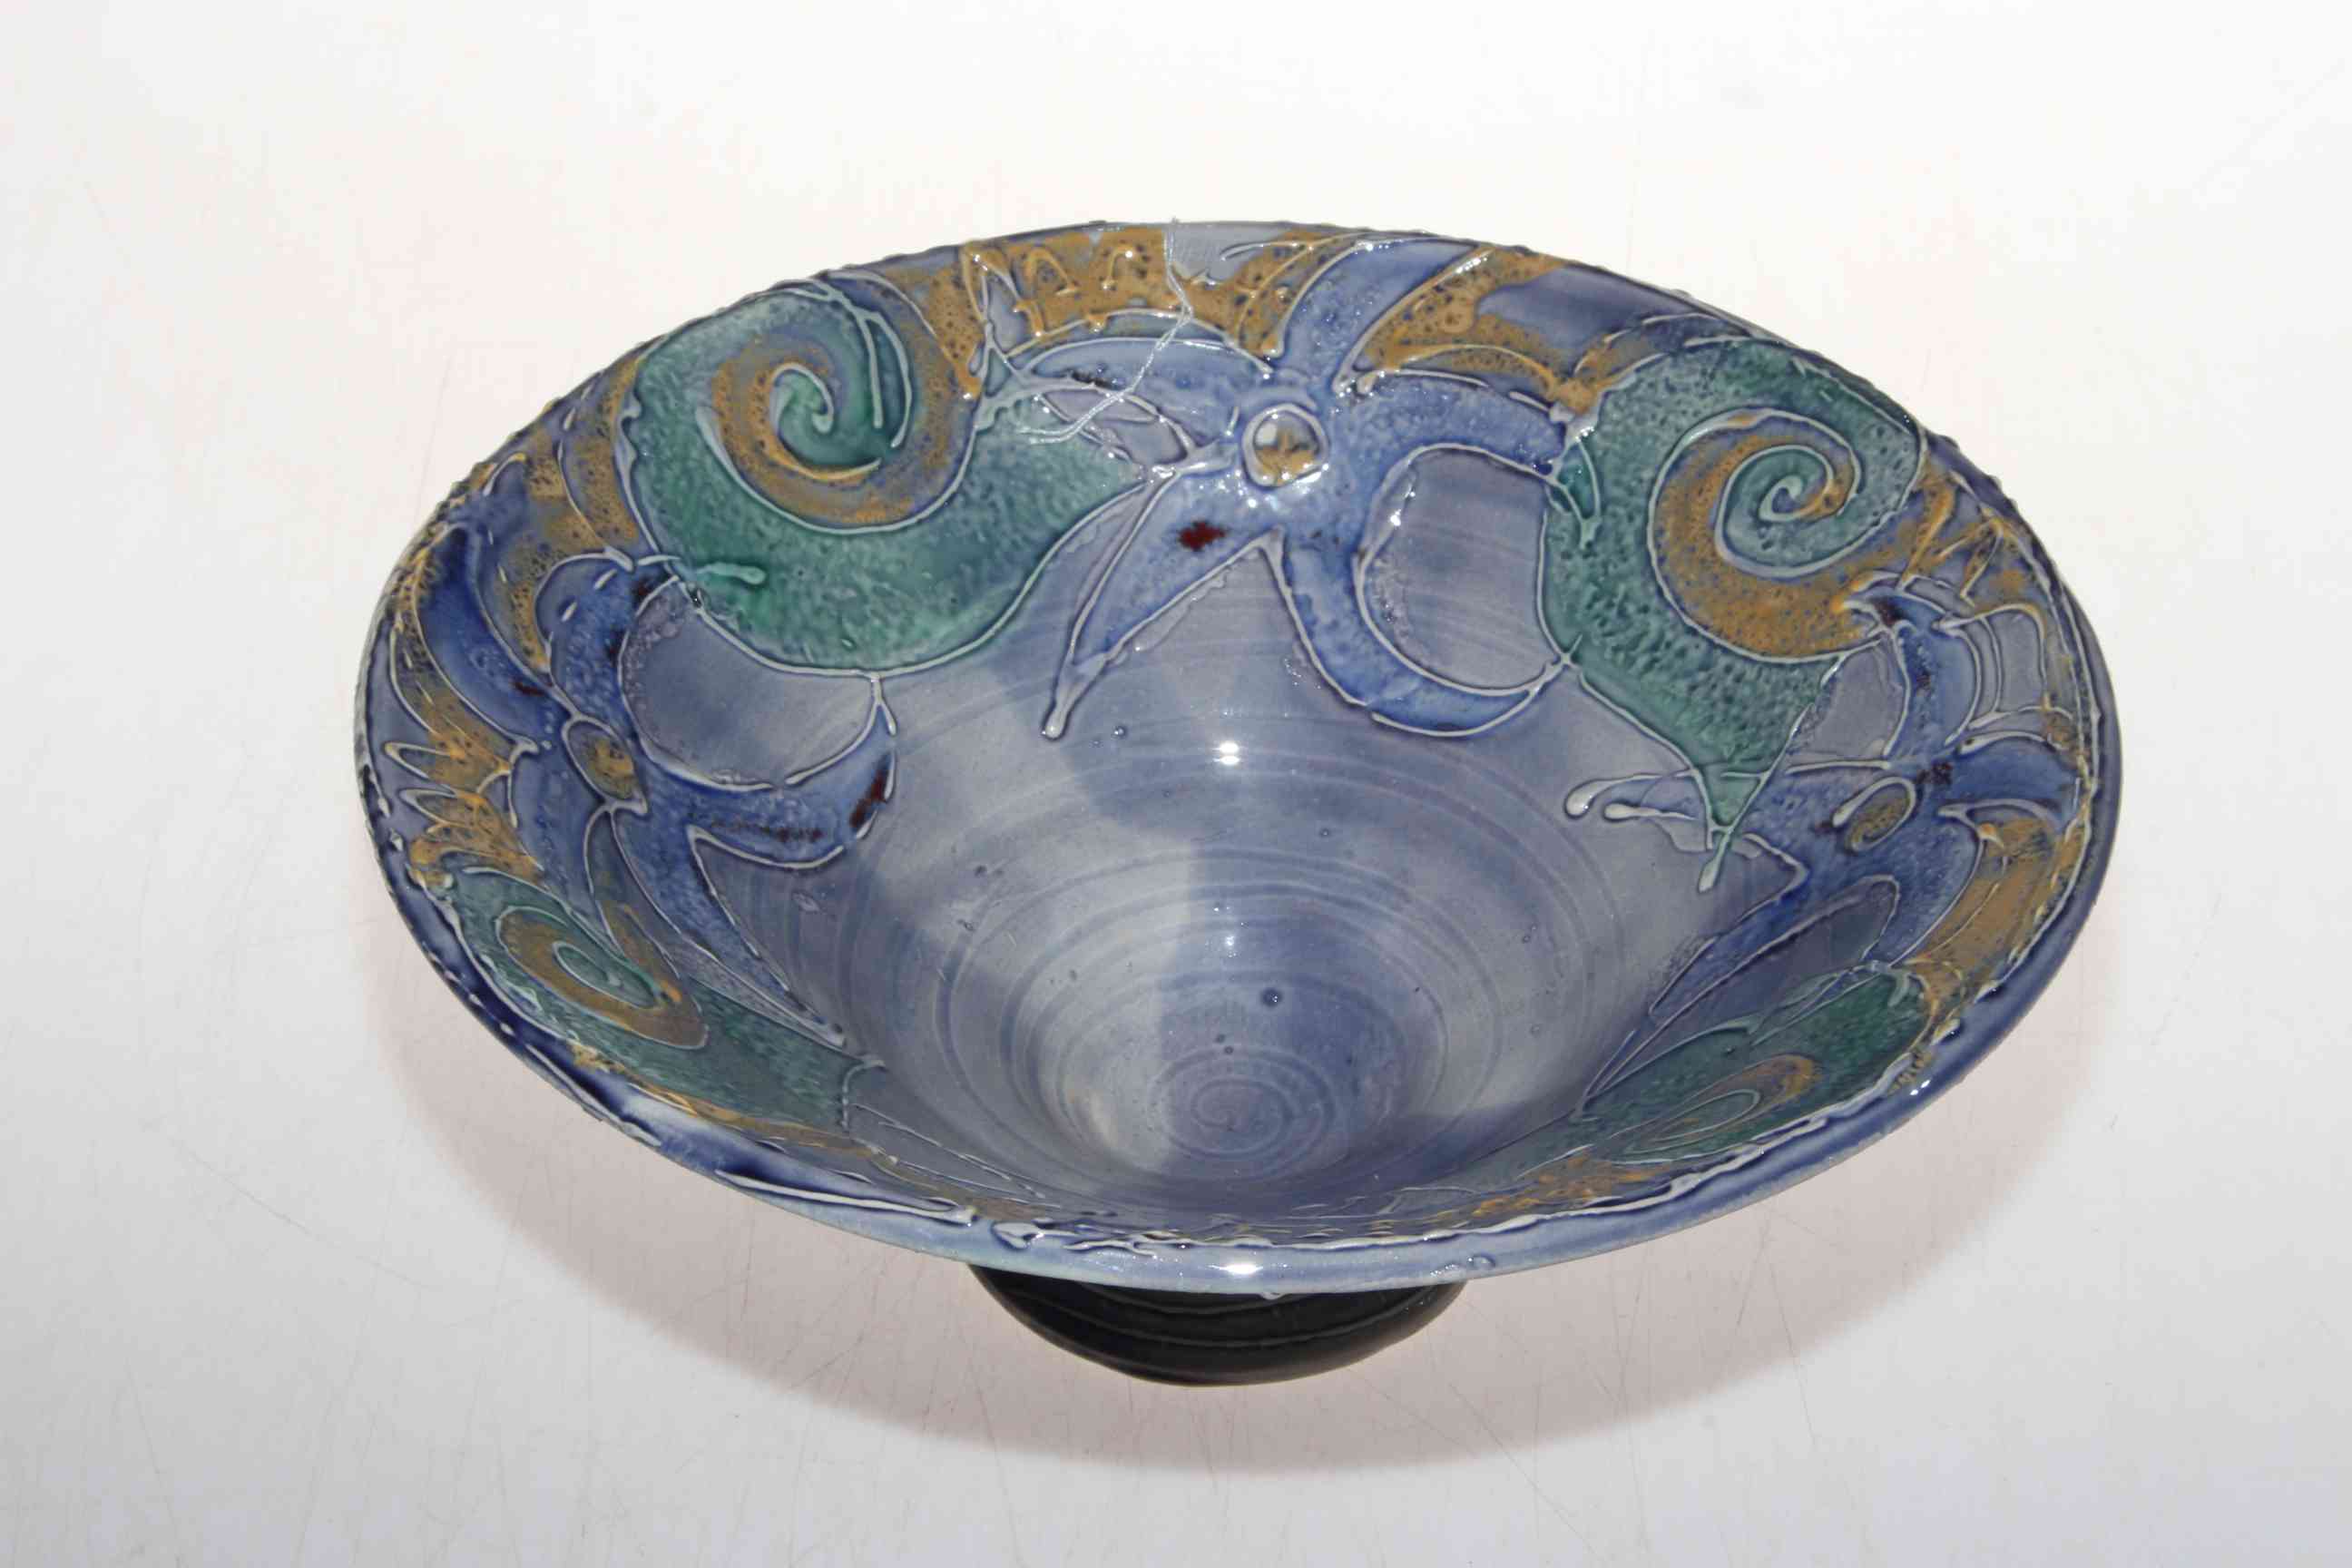 Studio bowl by H. Rushworth, 25cm.